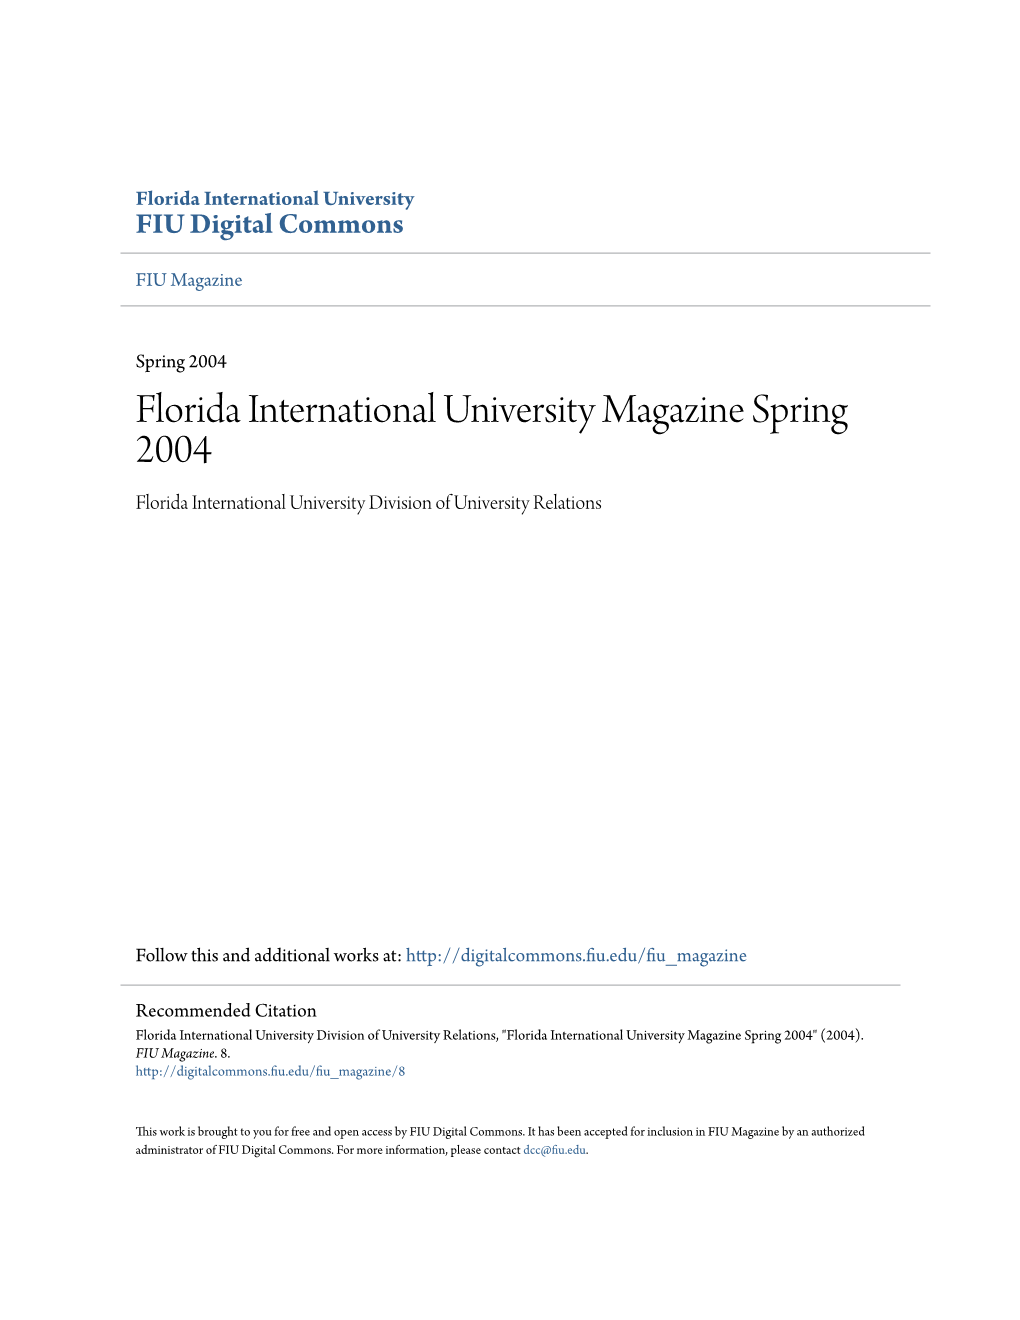 Florida International University Magazine Spring 2004 Florida International University Division of University Relations